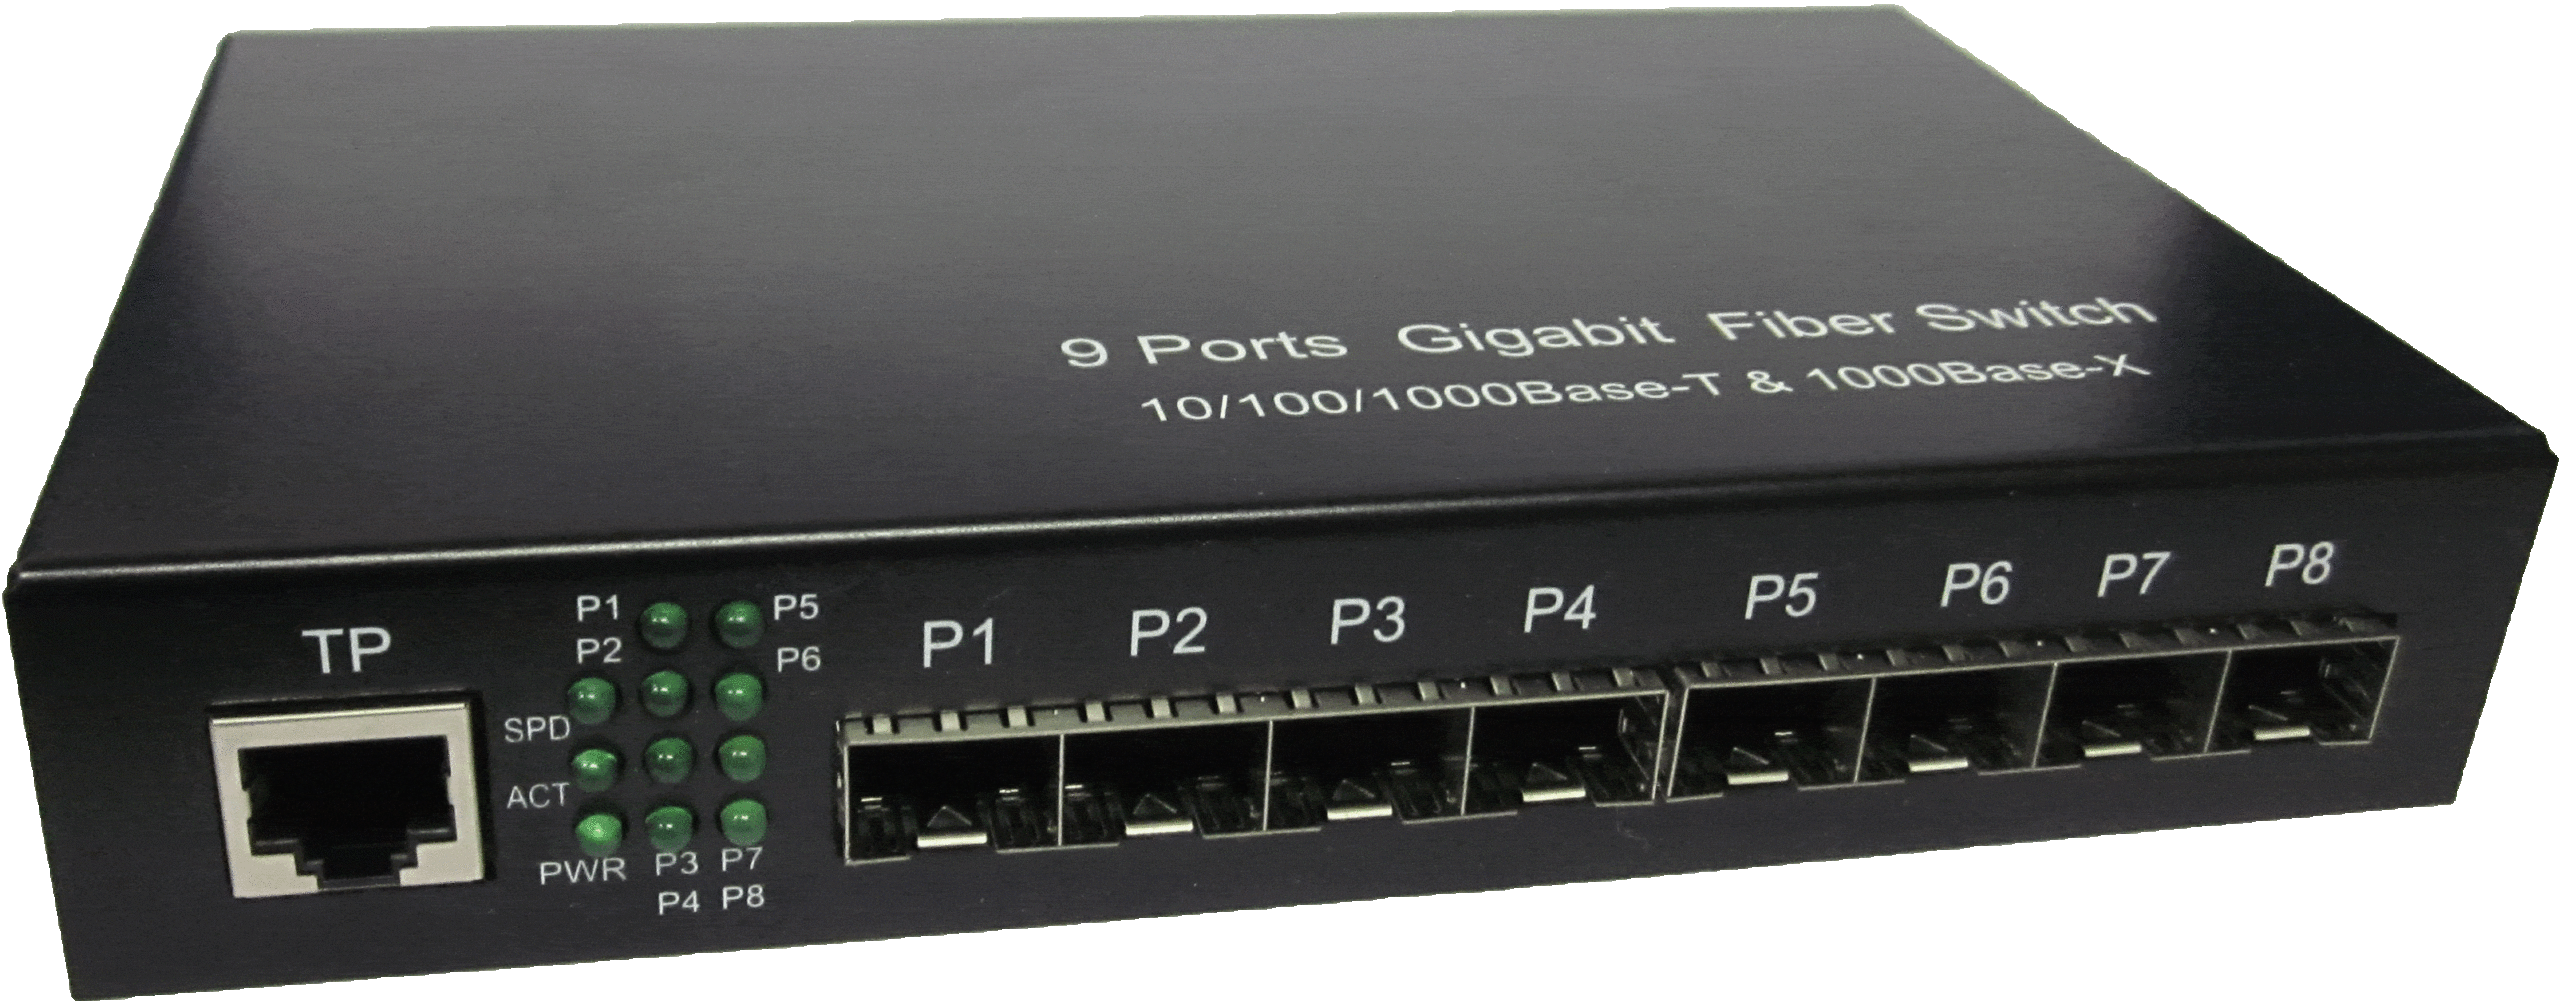 8 ports SFP slot & 1 port 10/100/1000 Gigabit Optical Fiber Switch